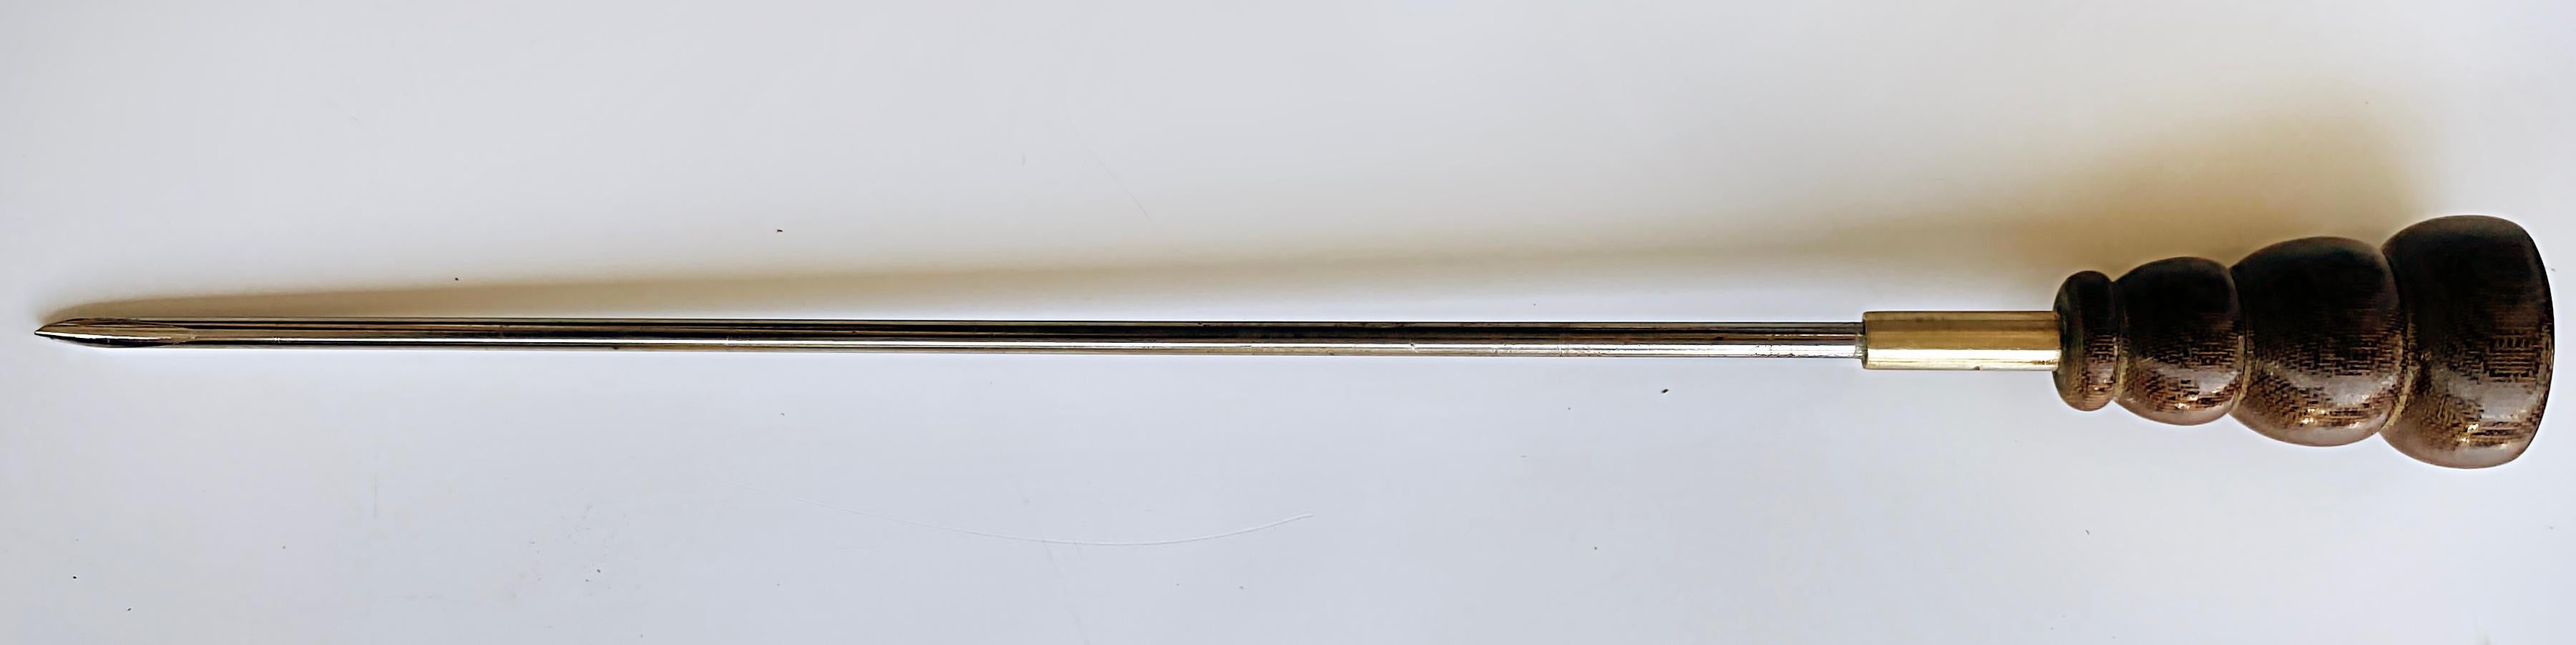 20th Century Early 1900s Czech Republic Dagger Walking Stick with Brass Lion Emblem Handle